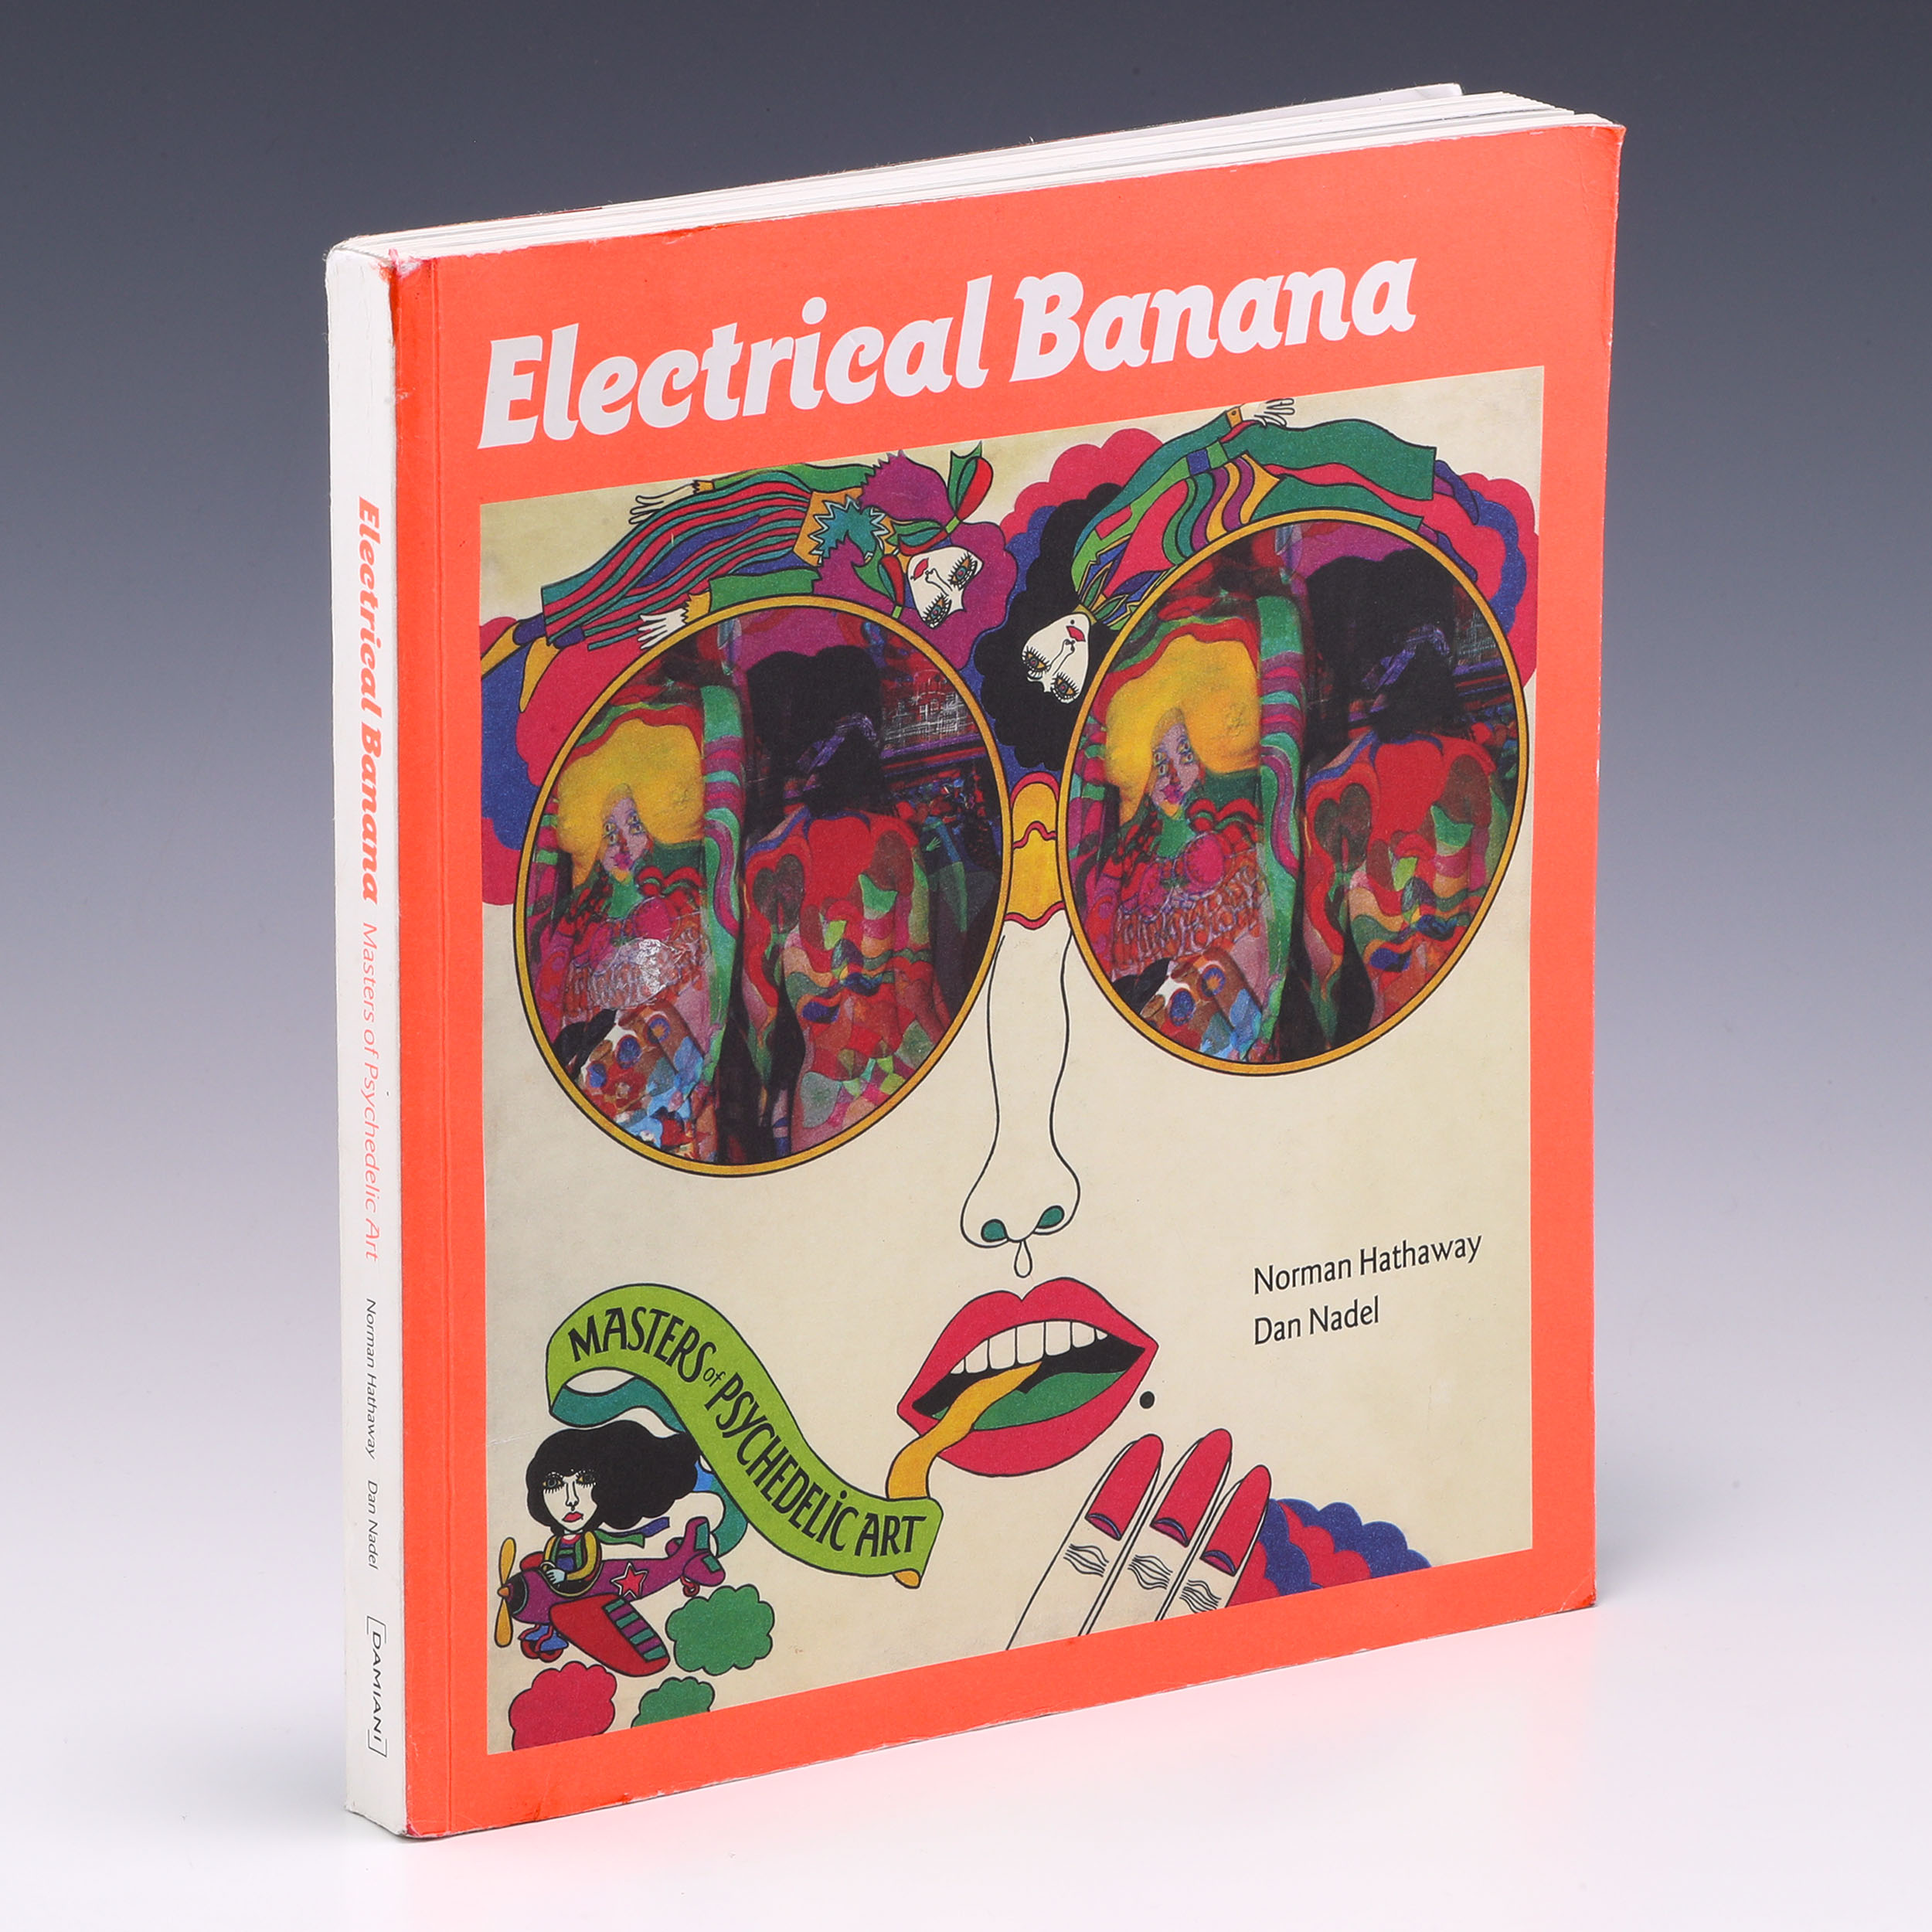 Electrical Banana: Masters of Psychedelic Art - Norman Hathaway & Dan Nadel